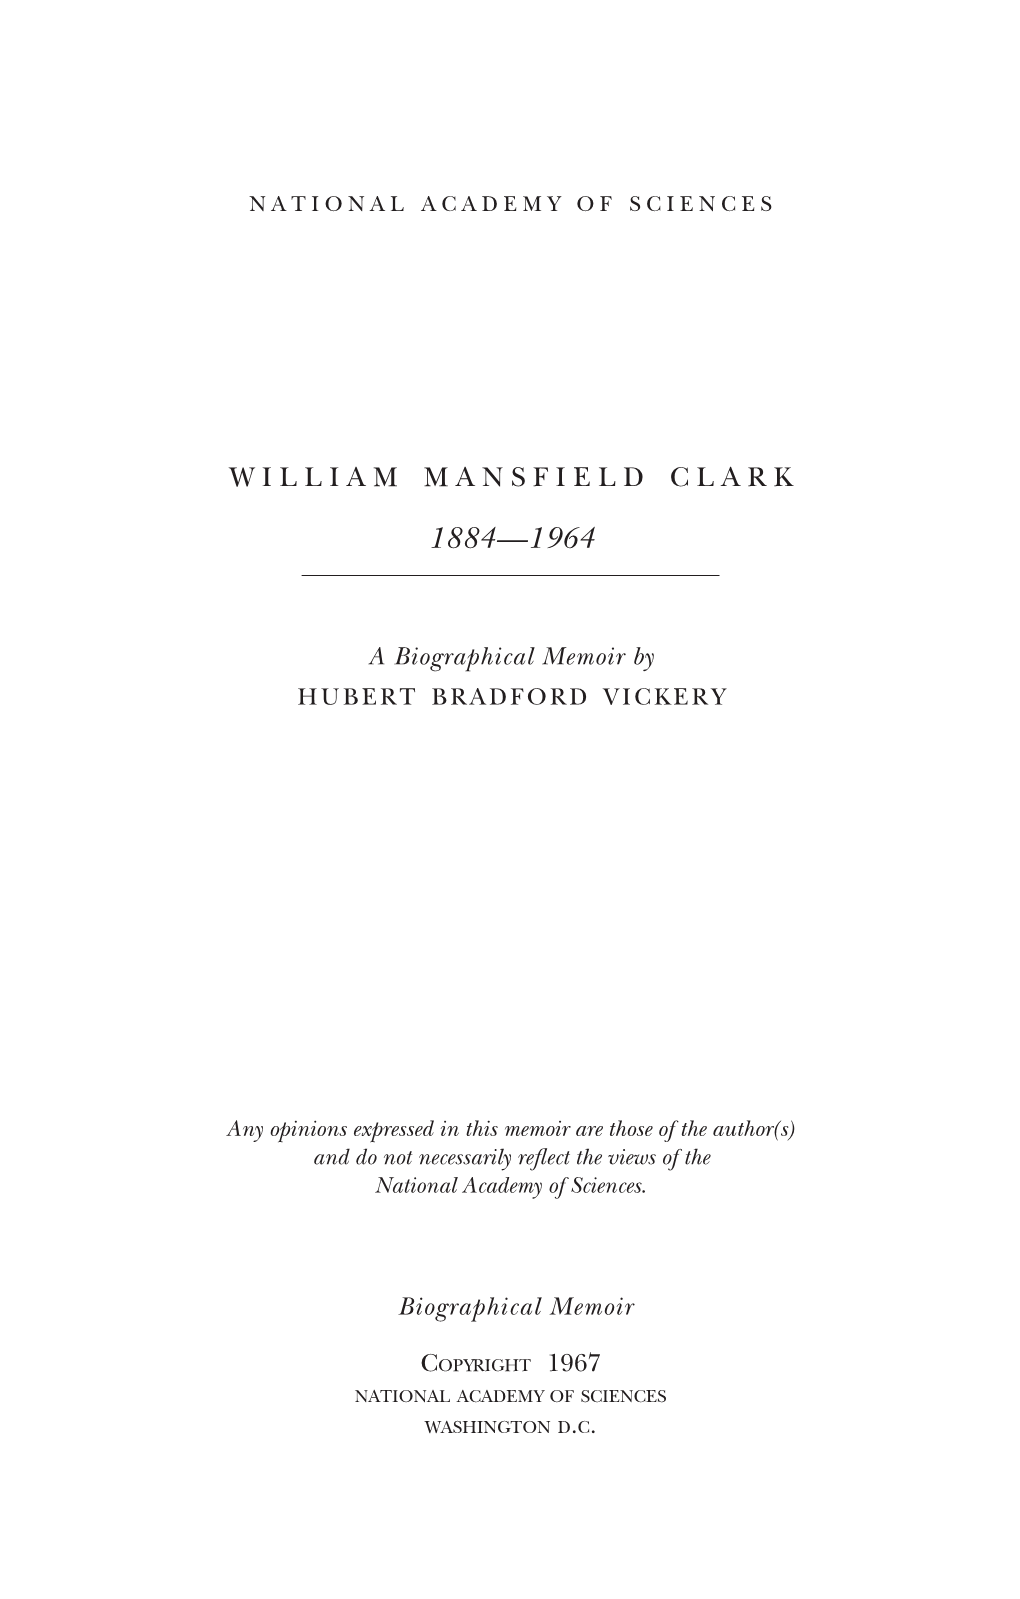 WILLIAM MANSFIELD CLARK August 17,1884-January 19,1964